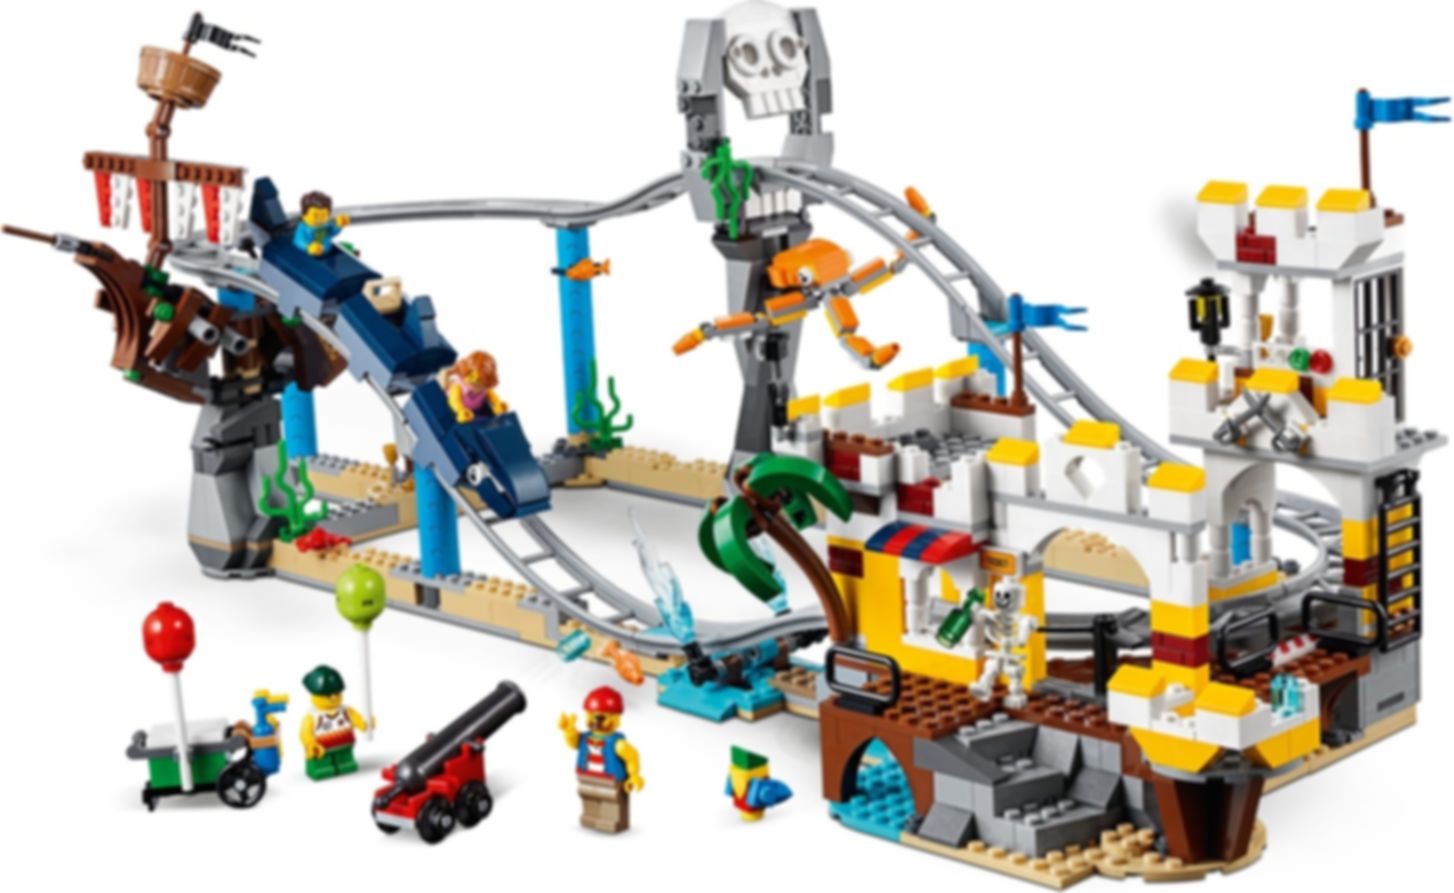 LEGO® Creator Pirate Roller Coaster gameplay